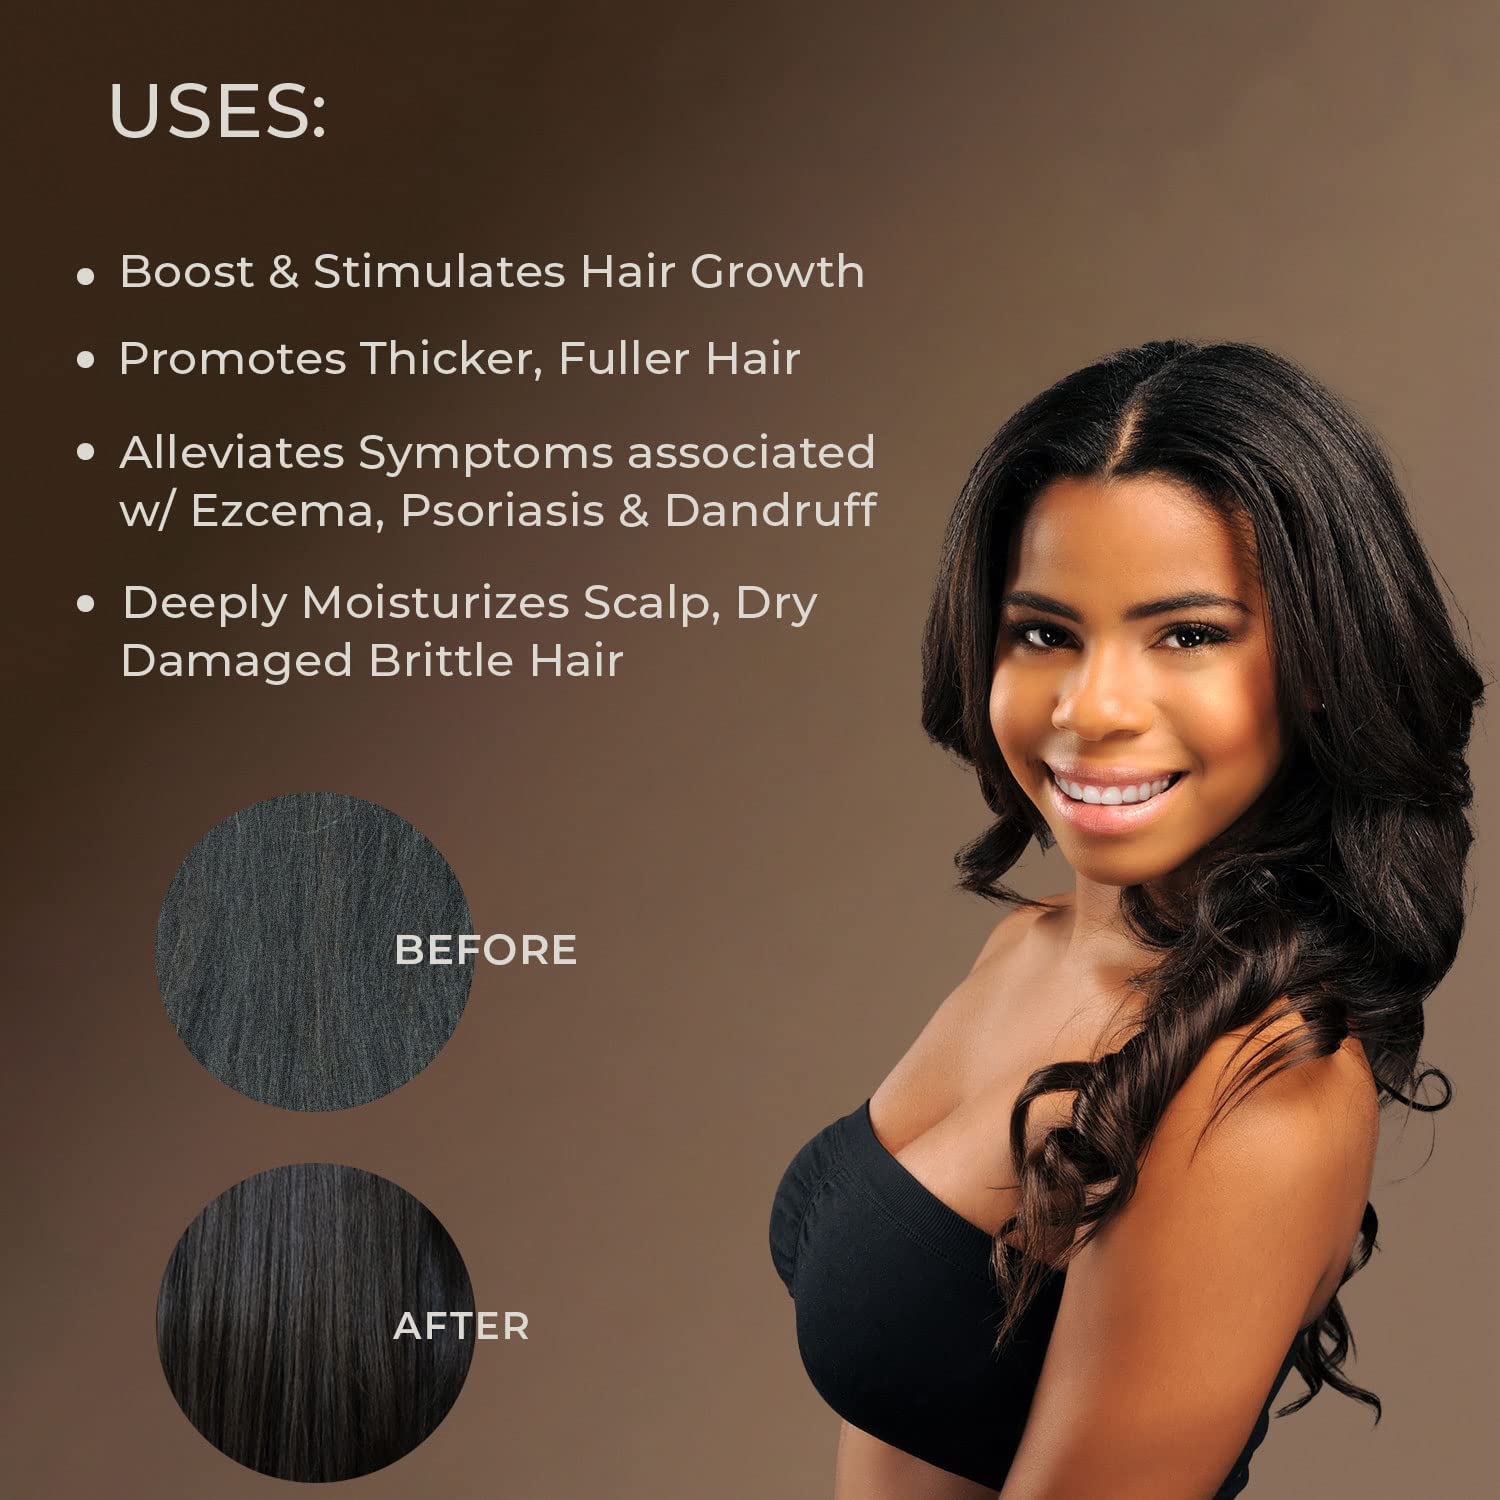 Sunny Isle Jamaican Black Castor Oil, 8 fl. oz. | 100% Natural Treatment for Hair, Scalp and Skin